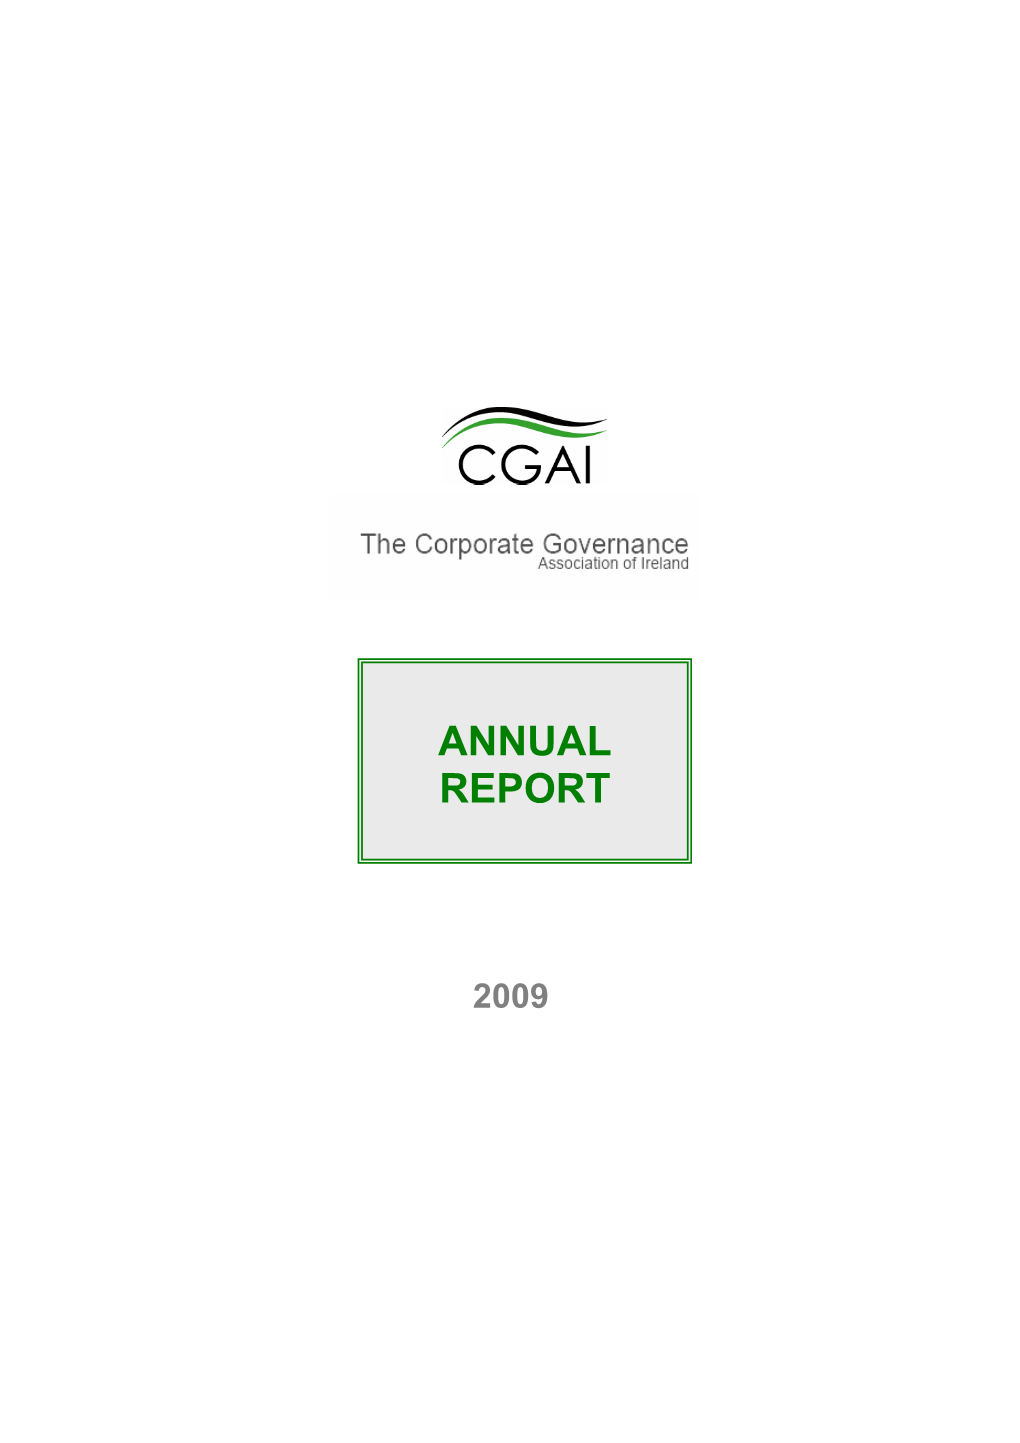 Annual Report CGAI 2009